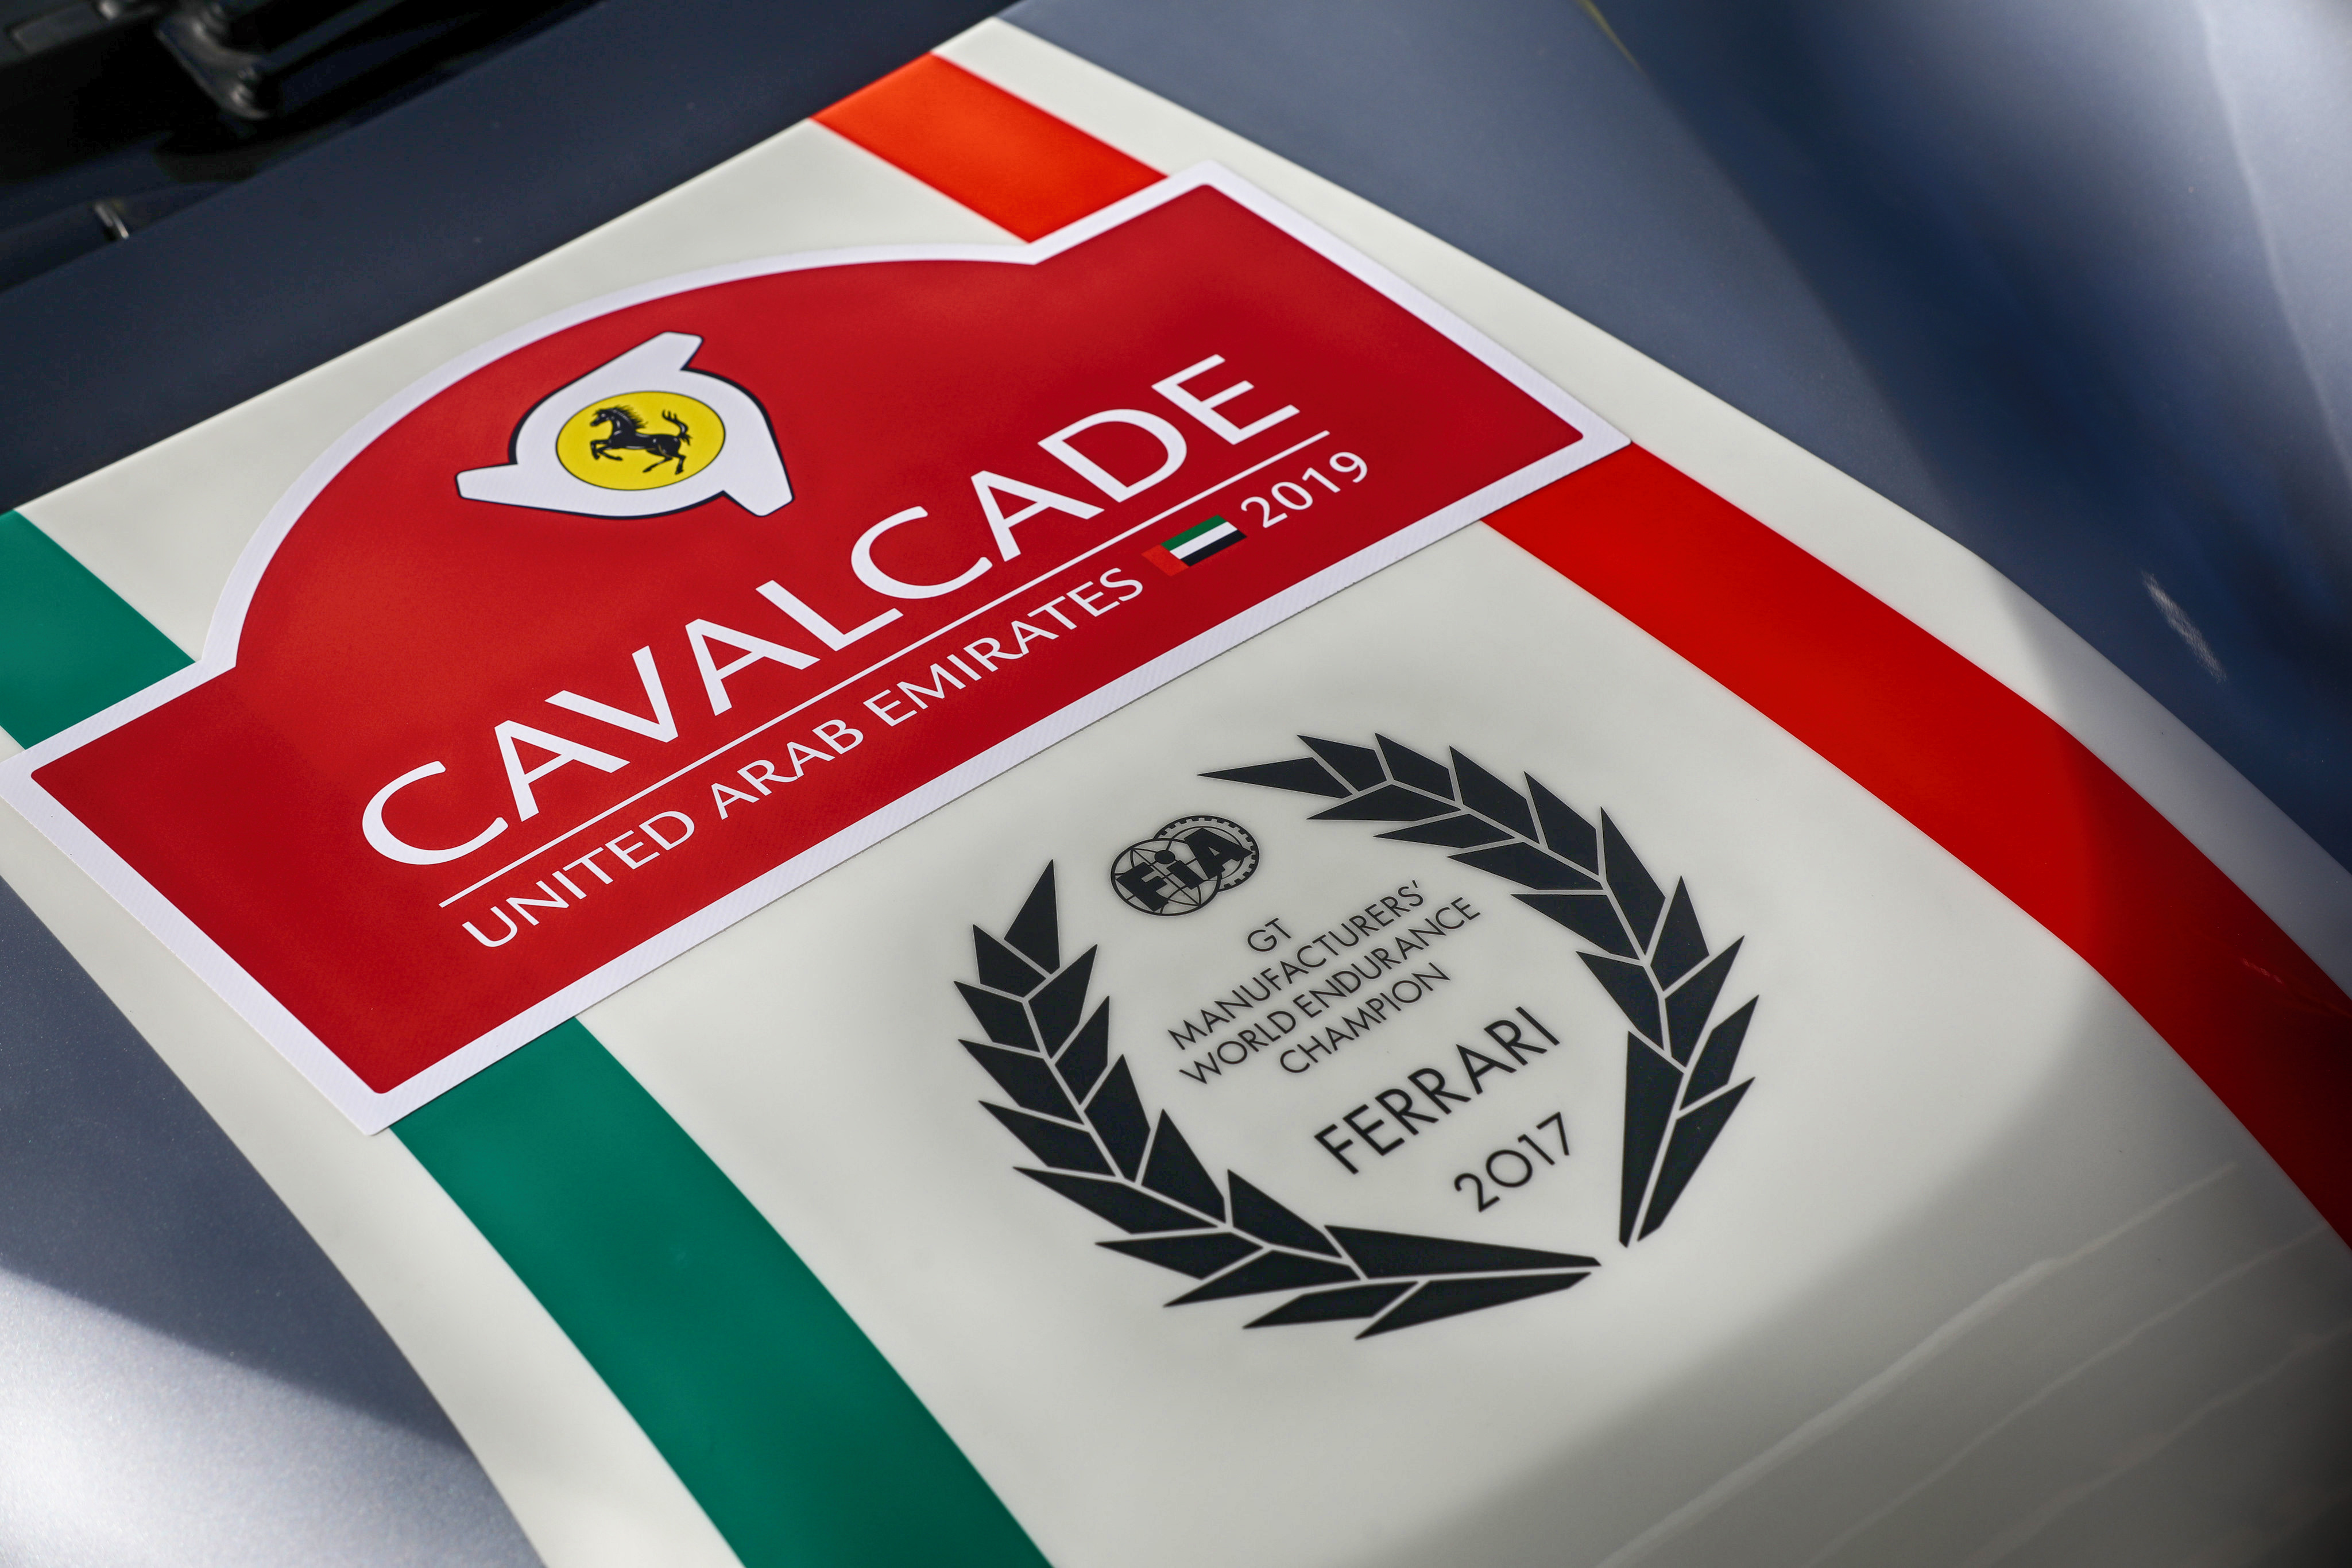 Ferrari Cavalcade International 2019